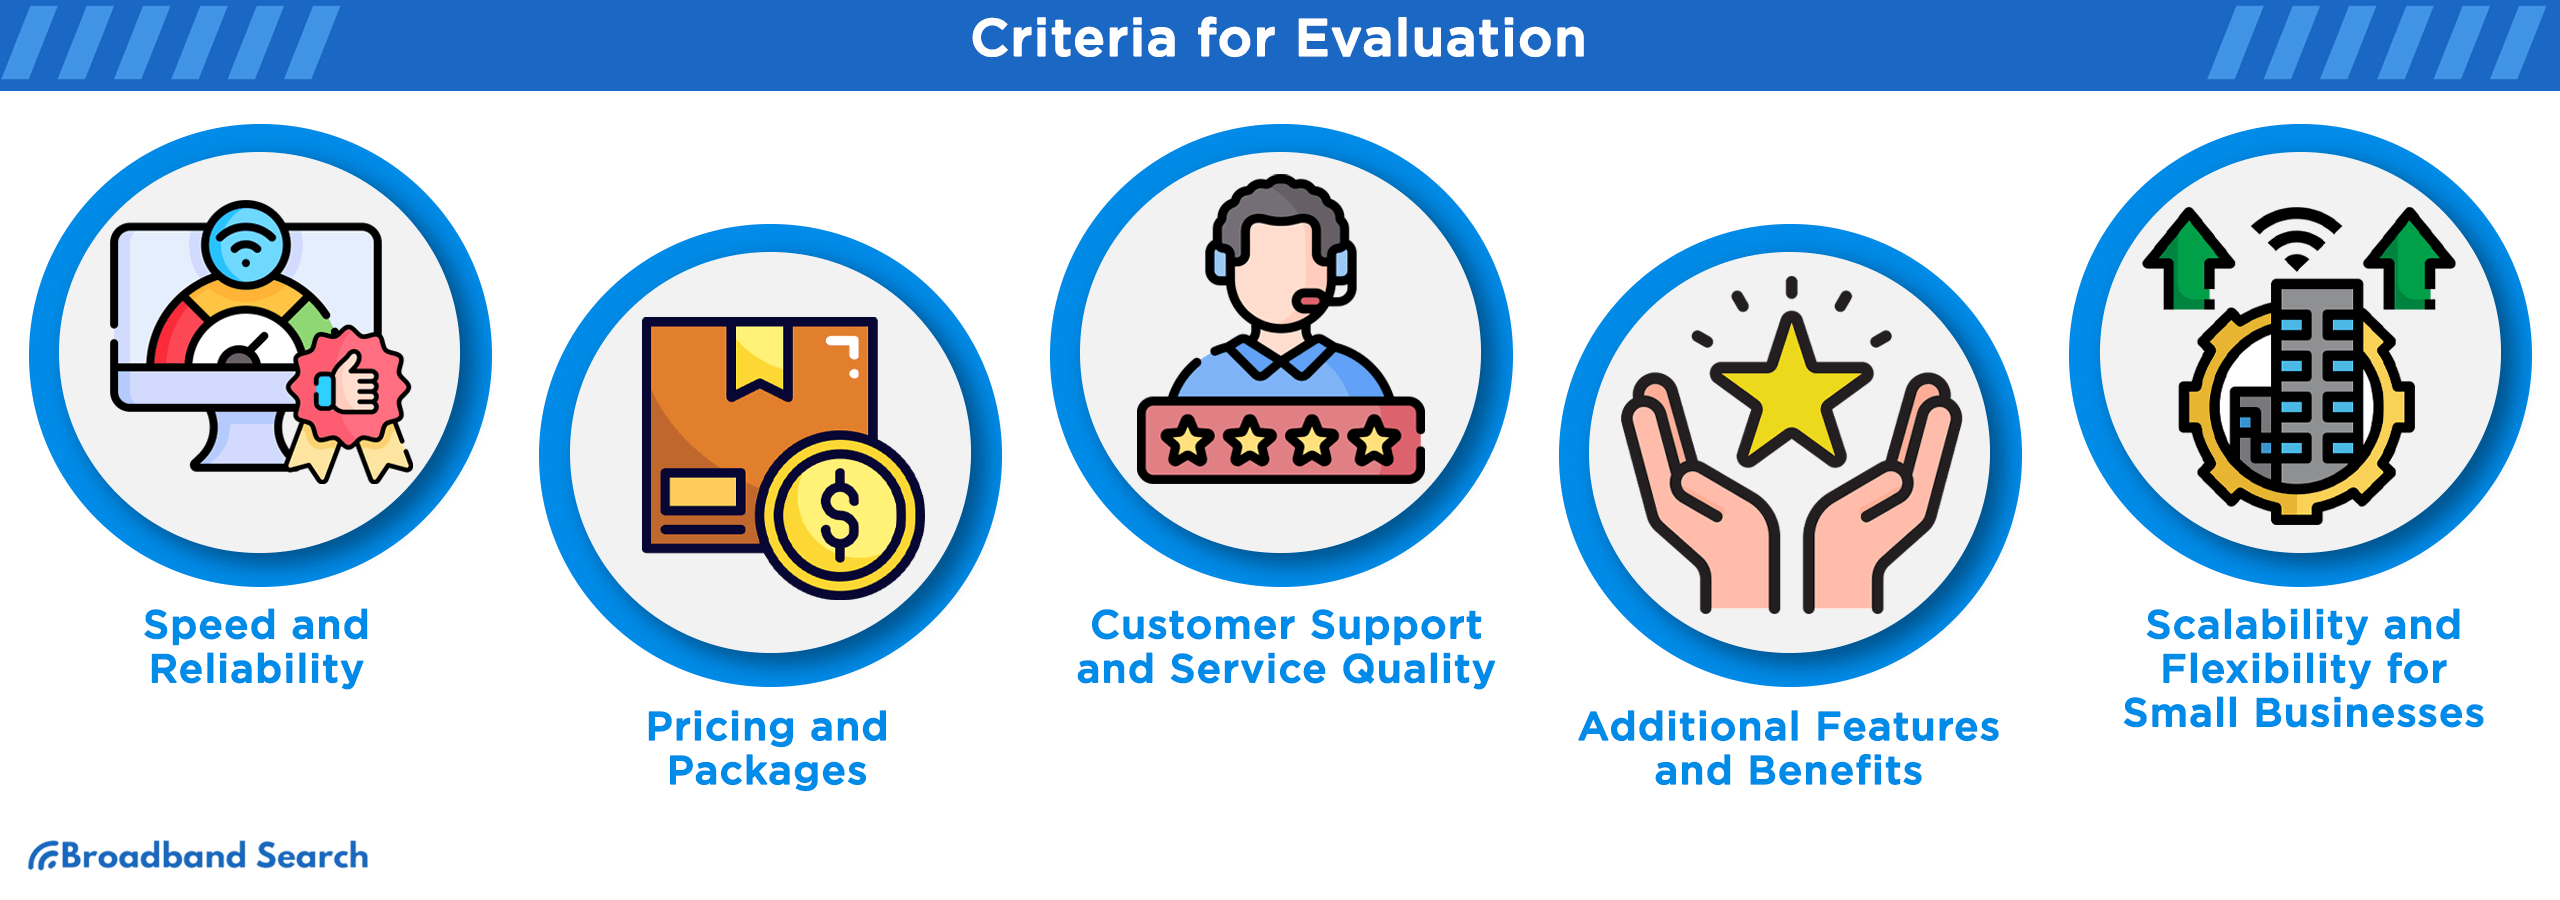 Criteria used for evaluation